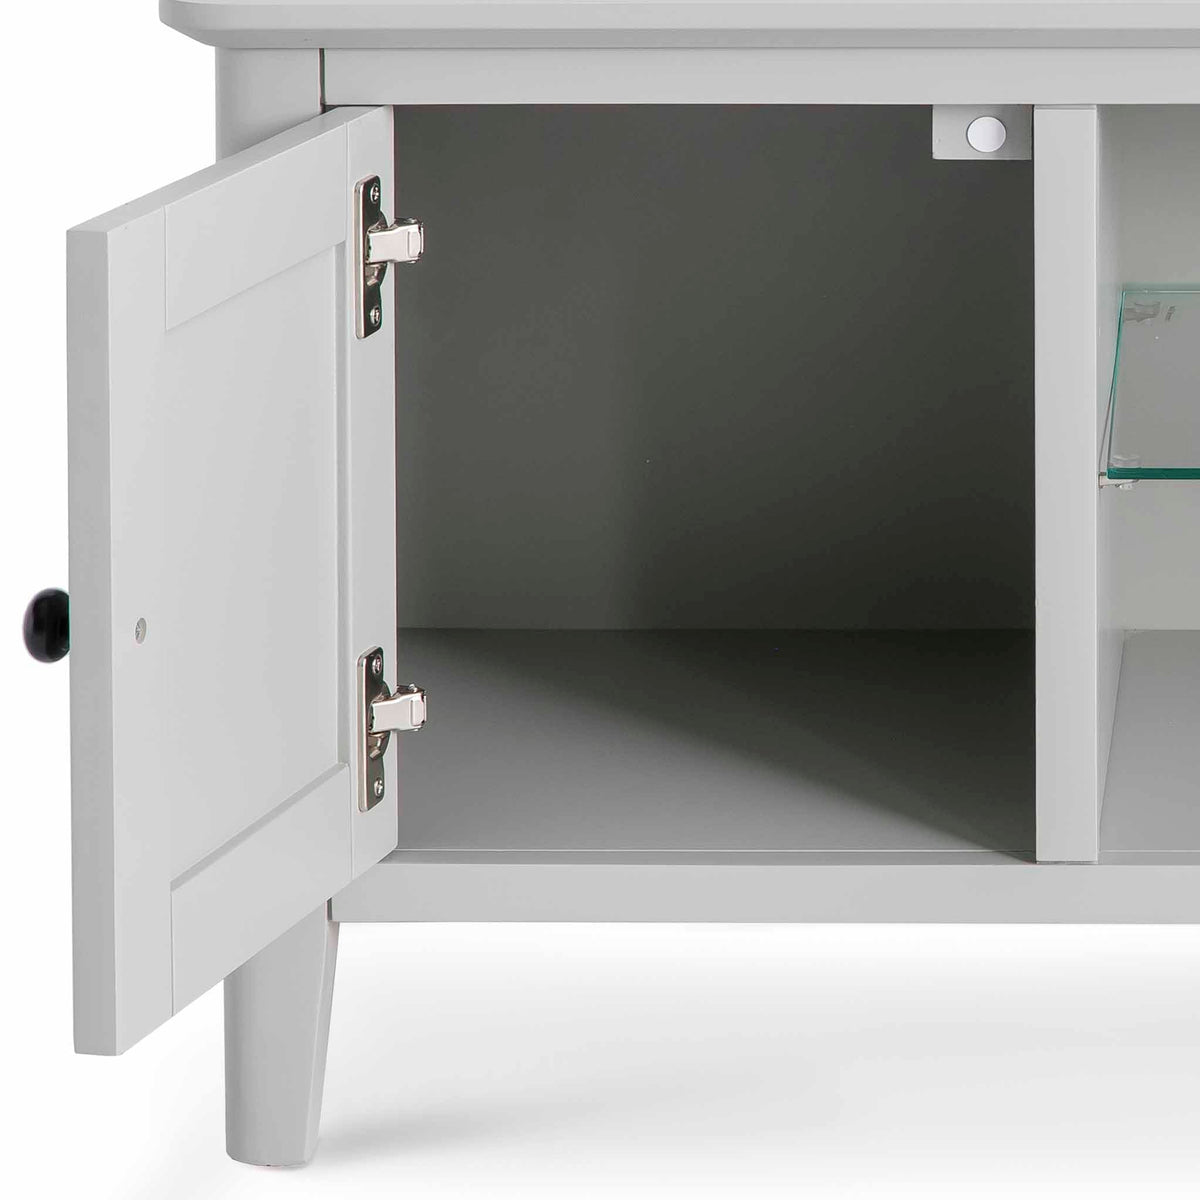 Elgin Grey 120cm large TV stand - Close up of inside cupboard